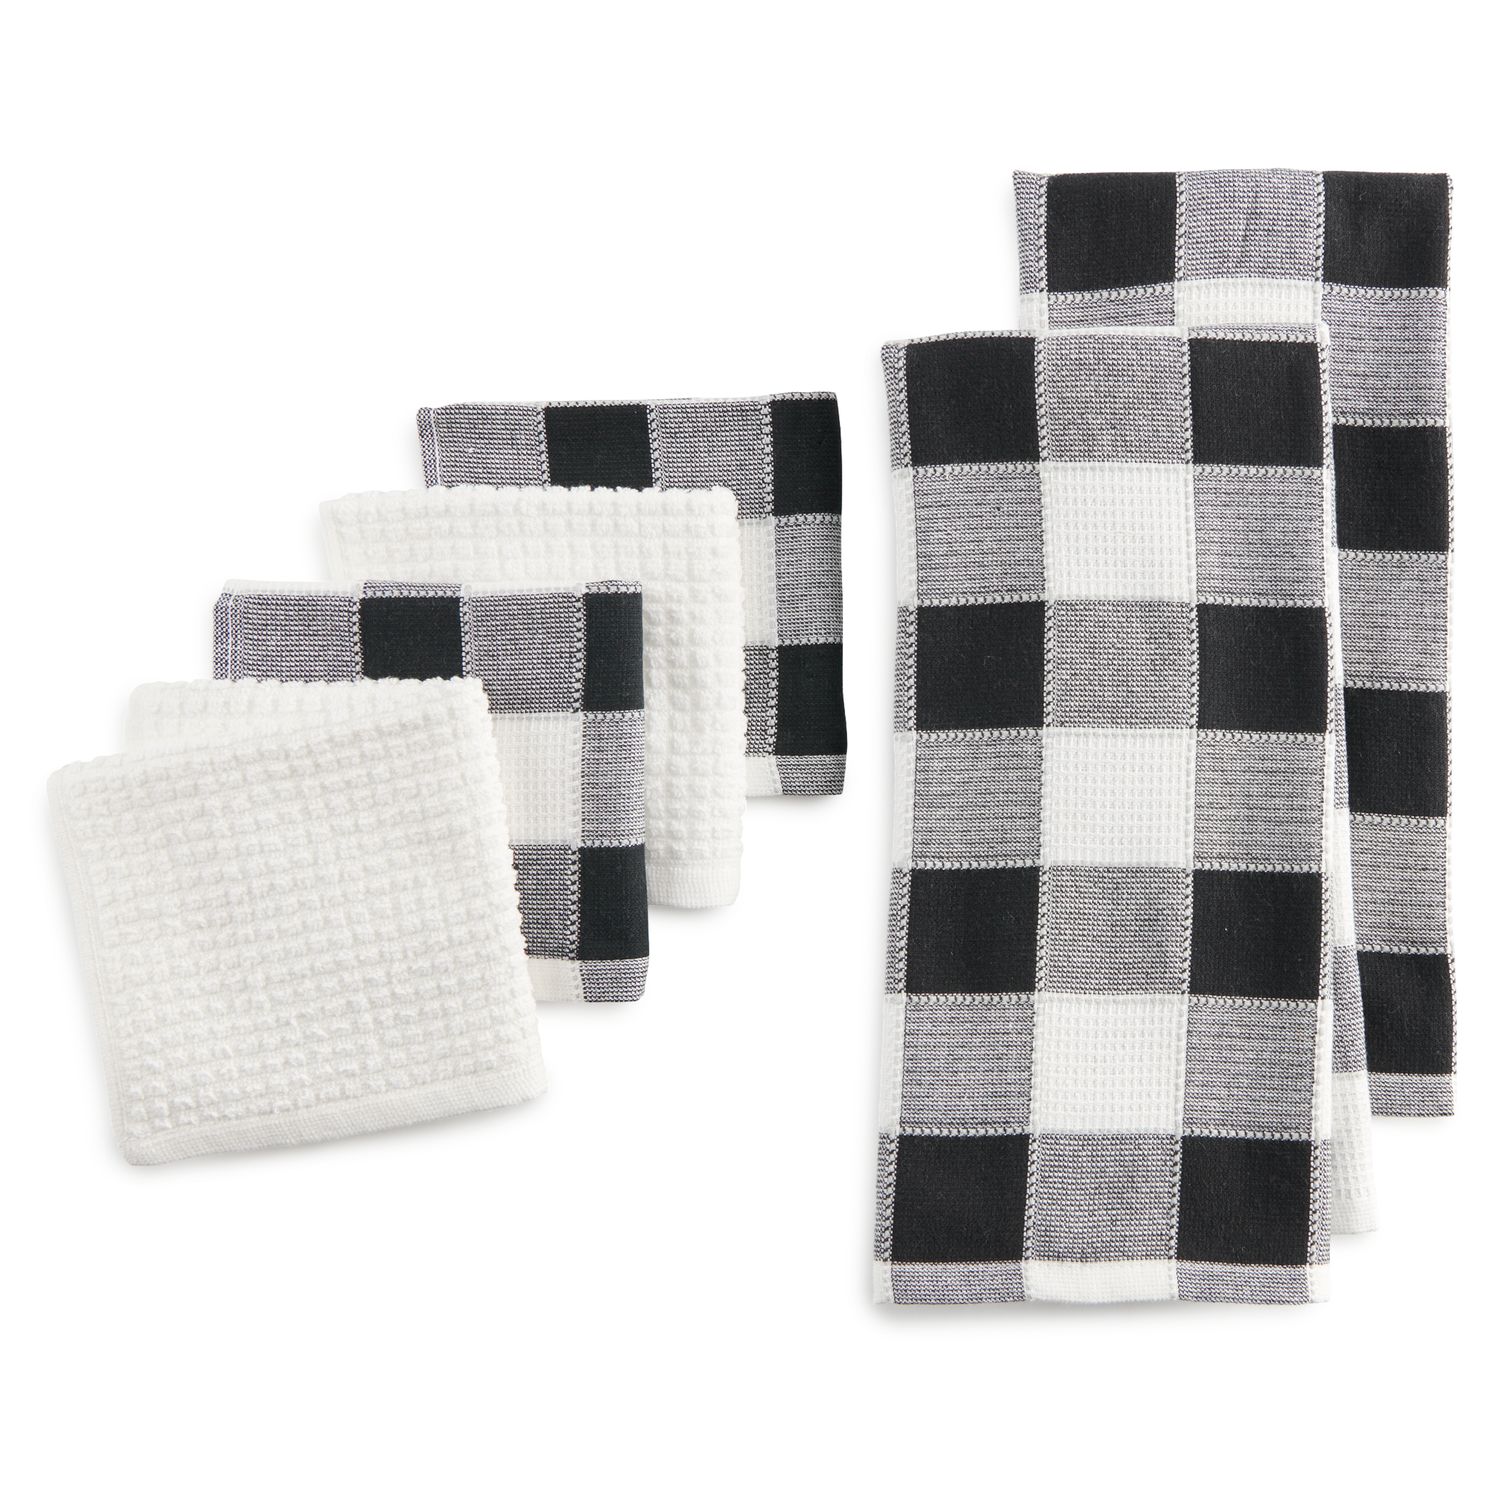 Elrene Farmhouse Living Sentiments Black/White Kitchen Towels (Set of 4)